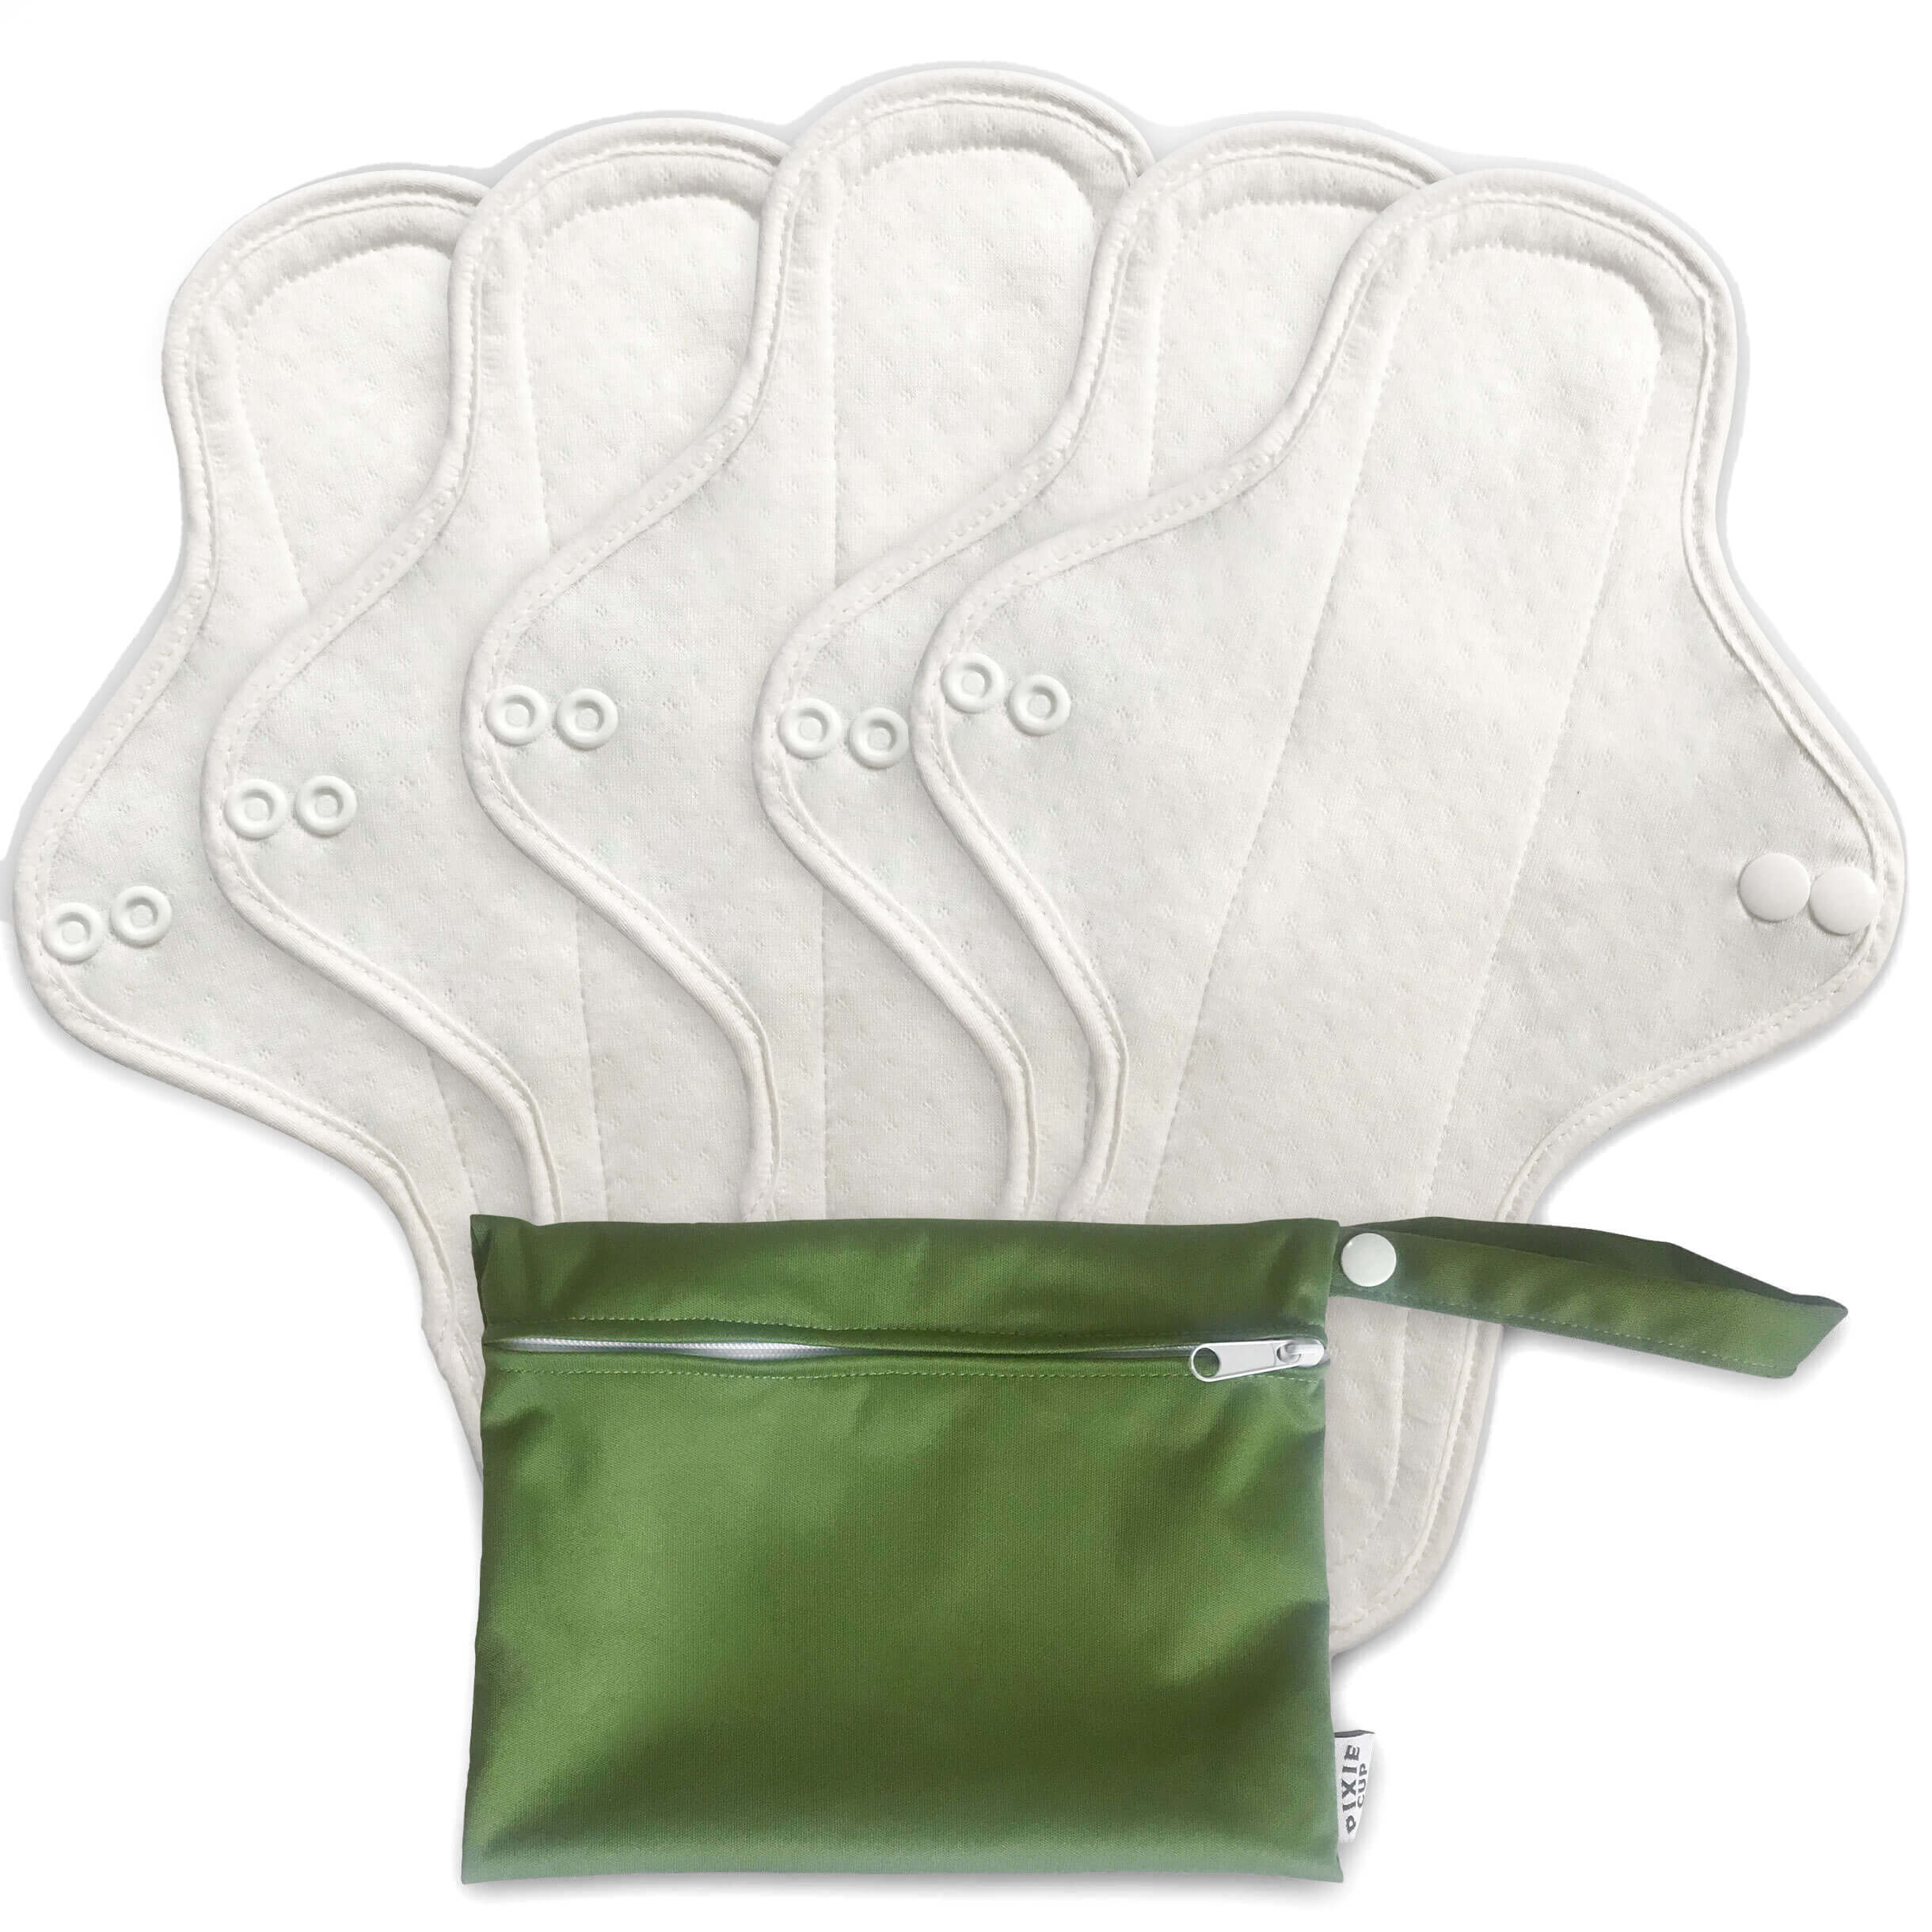 5 Small Panty Liners 1 Wet Bag Cloth Menstrual Pads Reusable